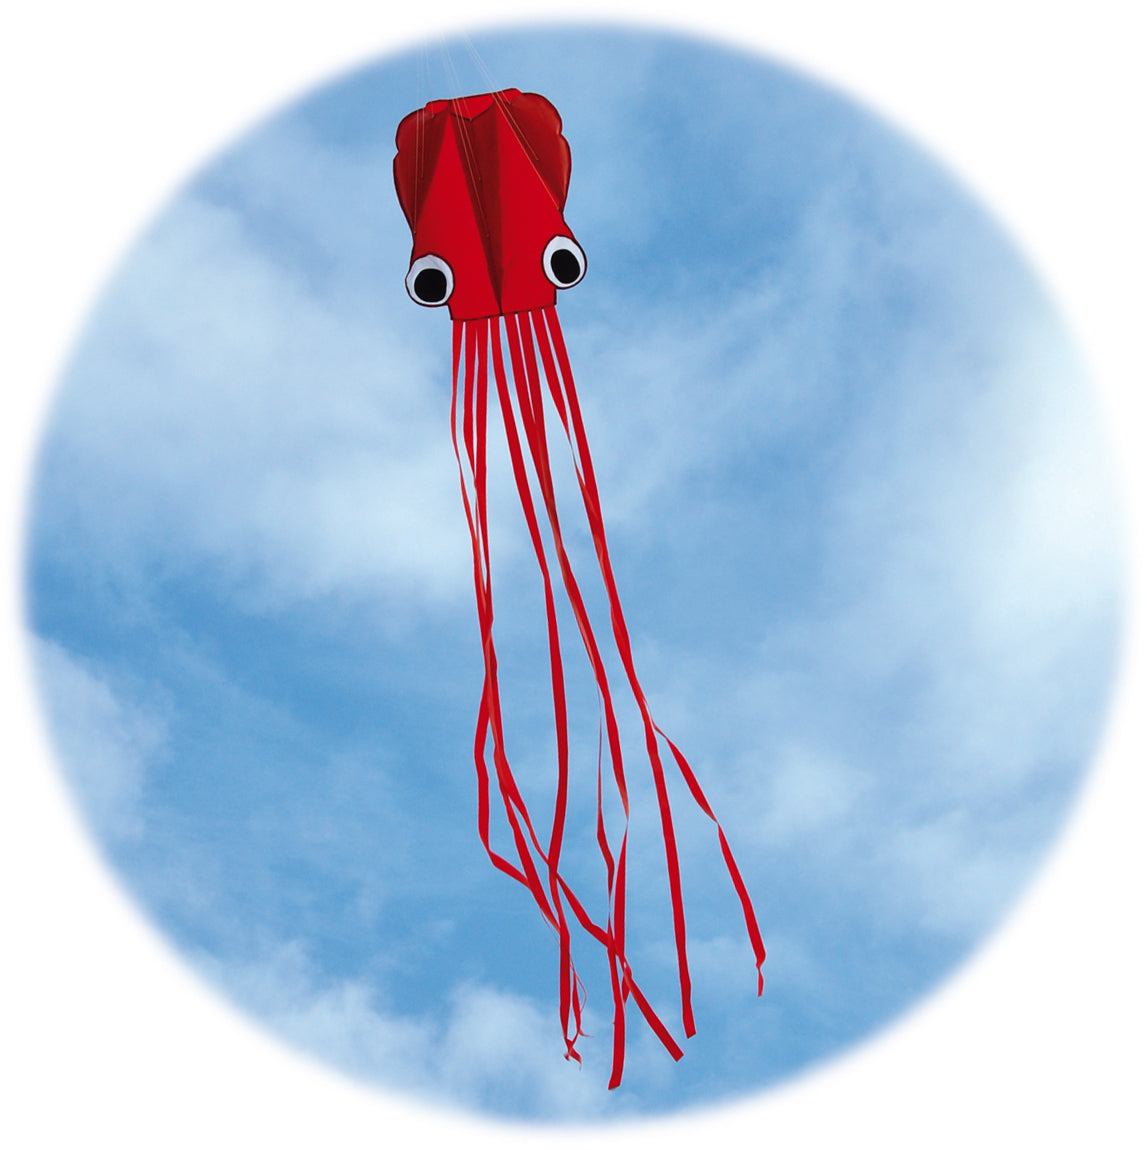 Octofoil Octopus squid single line kite RED